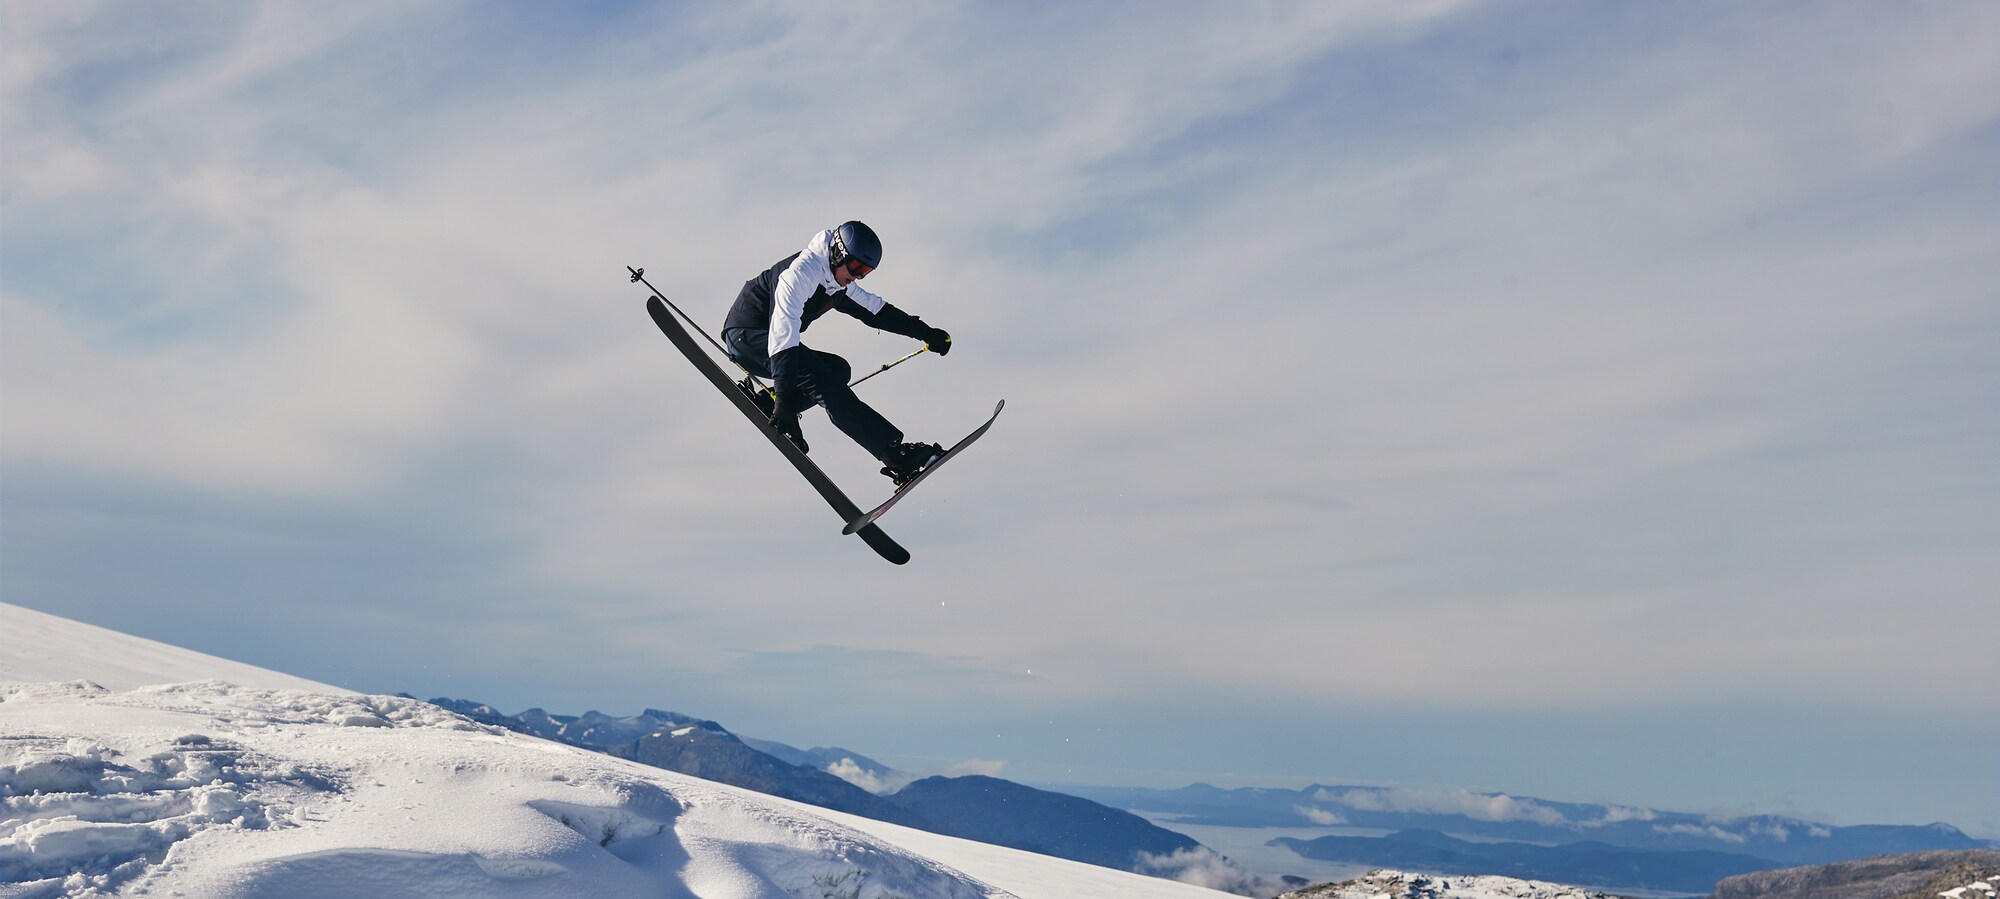 All for the slopes Ski & Snowboard